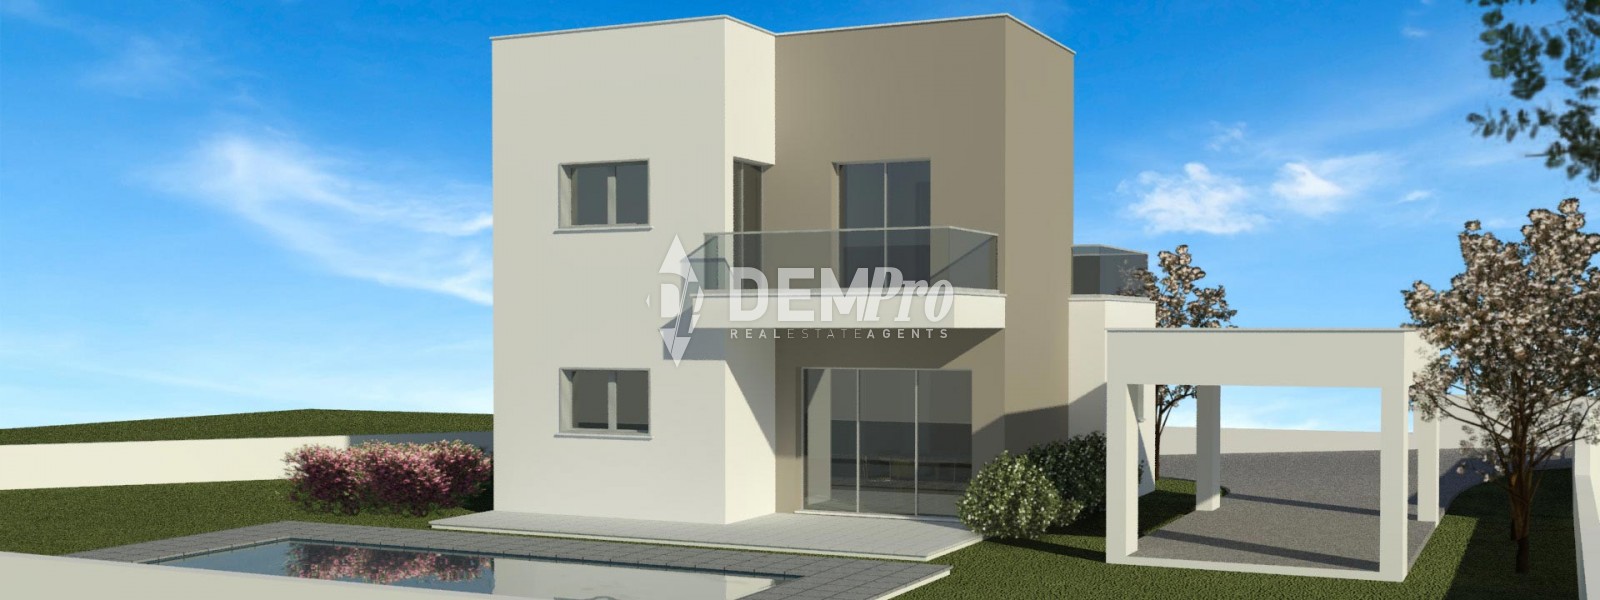 2 Bedroom Villa for Sale in Kouklia, Paphos District